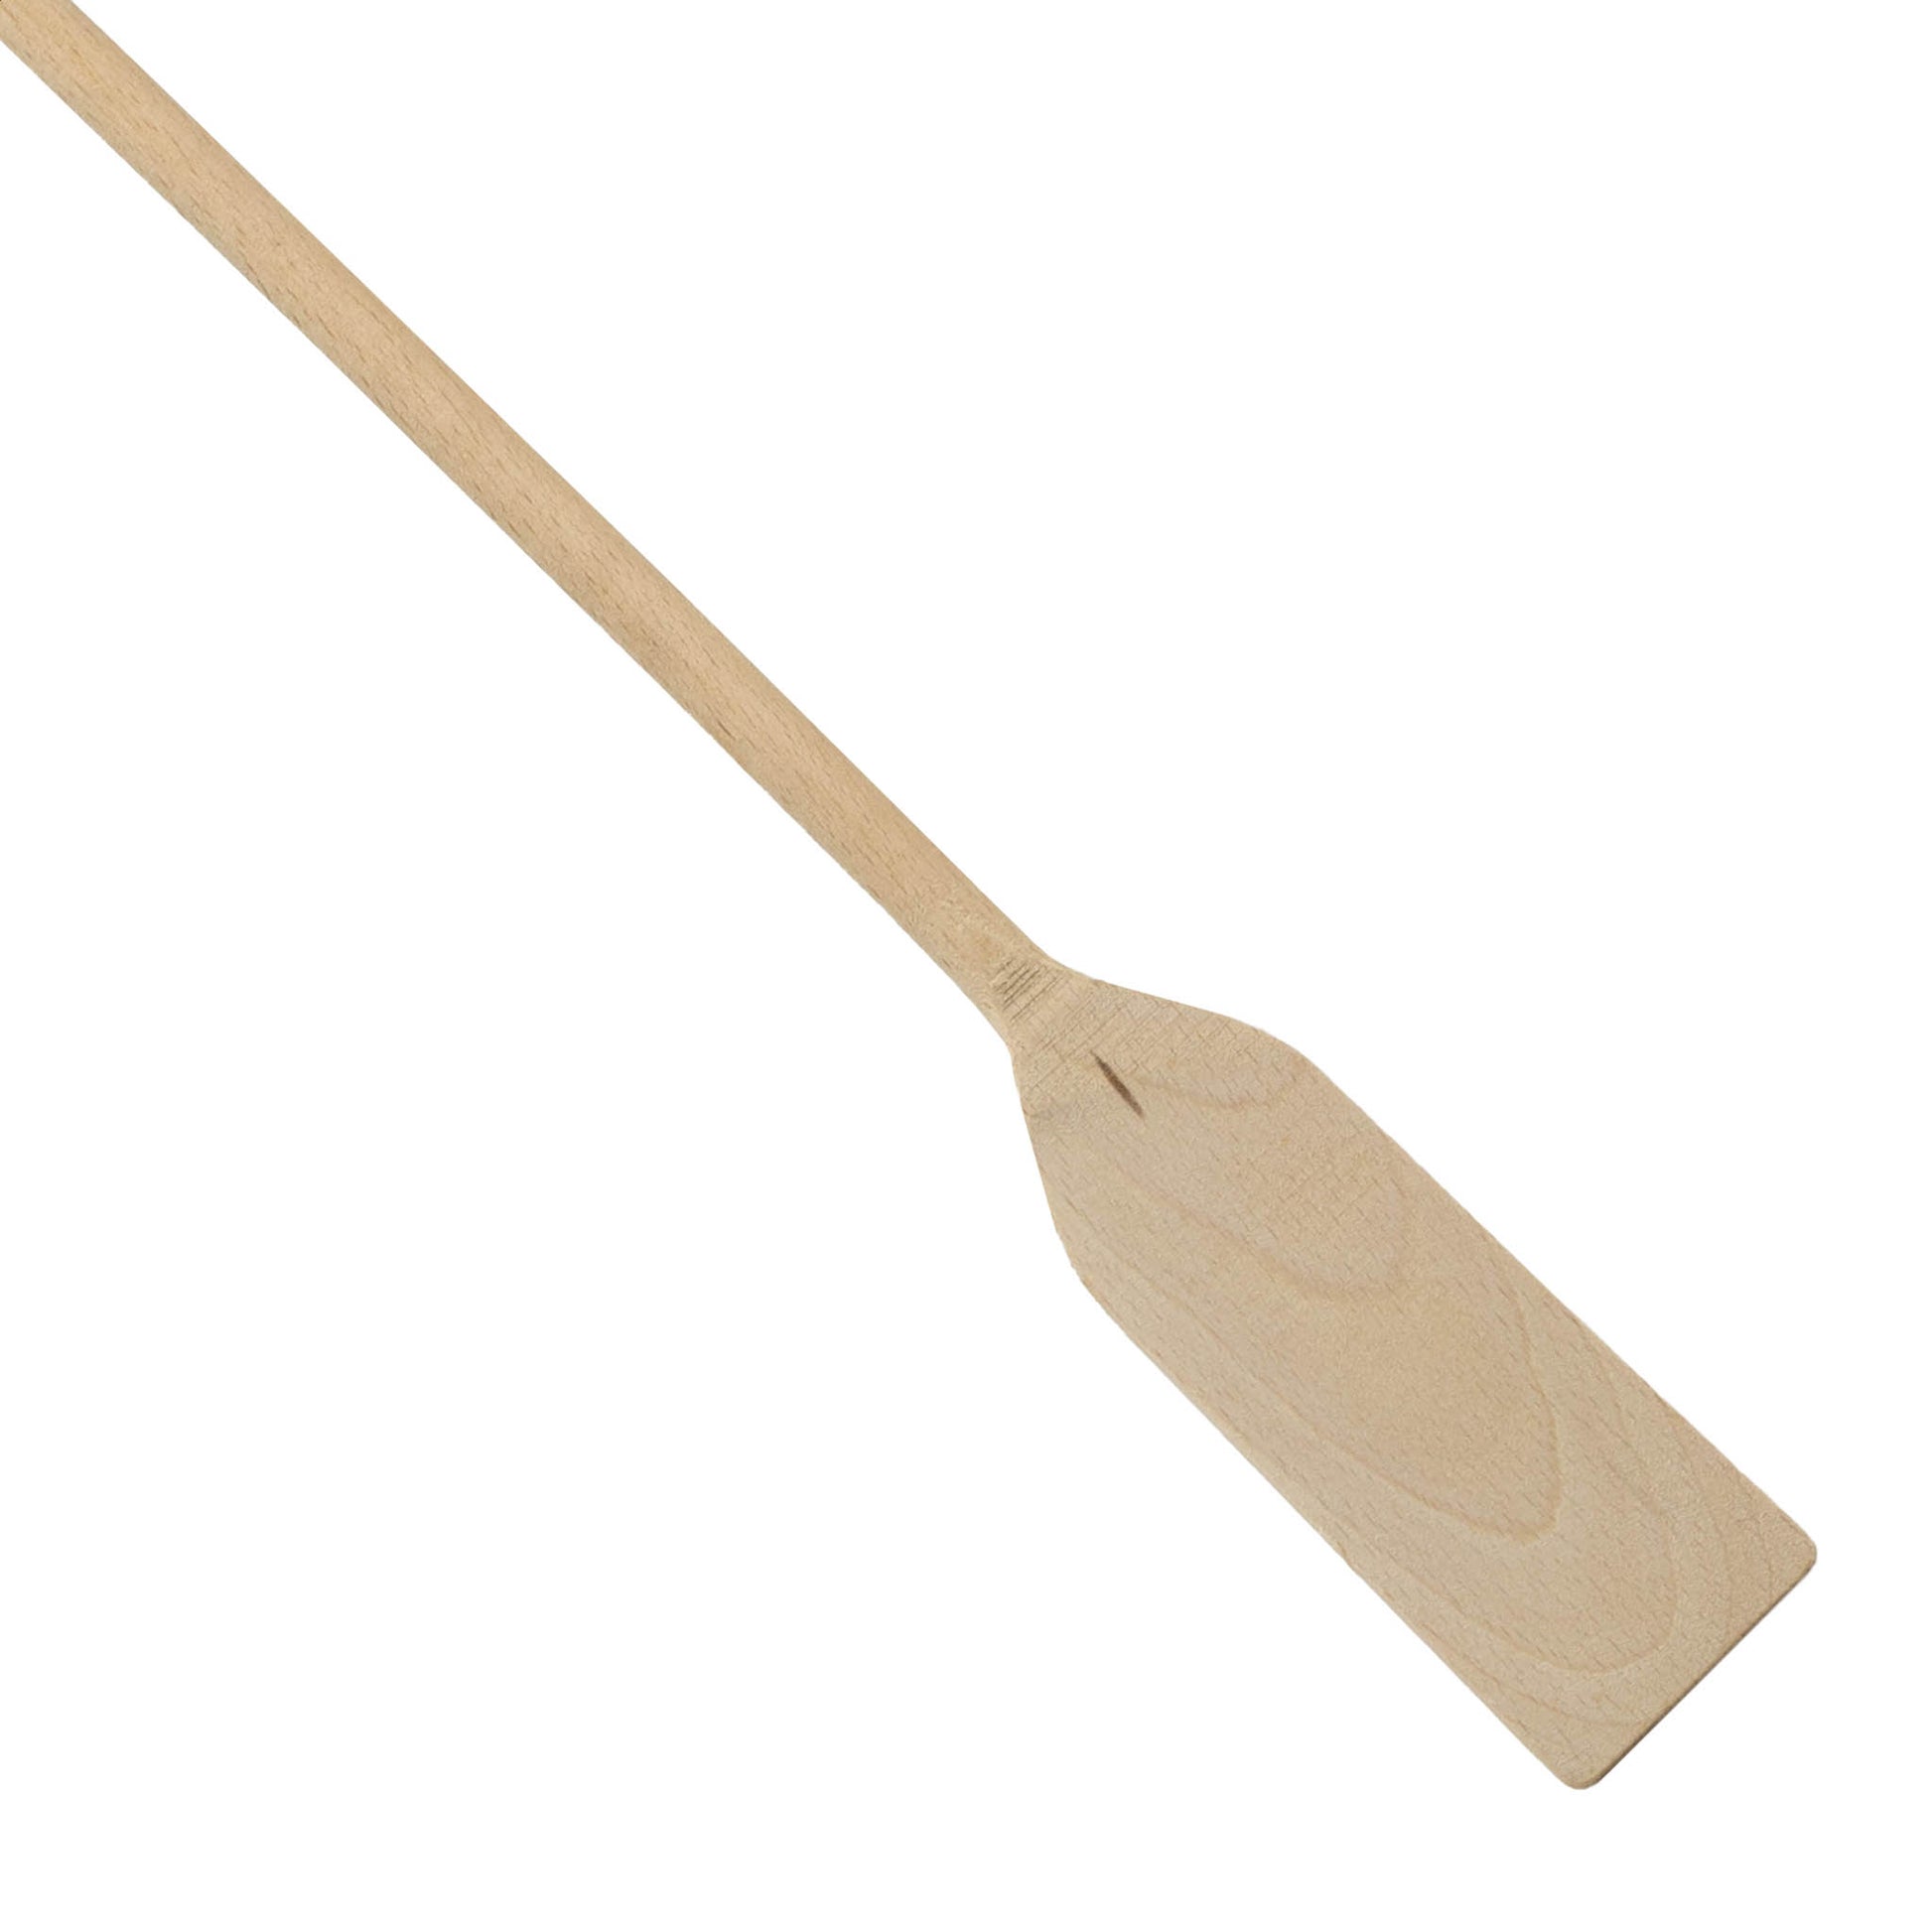 80cm long wooden paddle for passata making. 